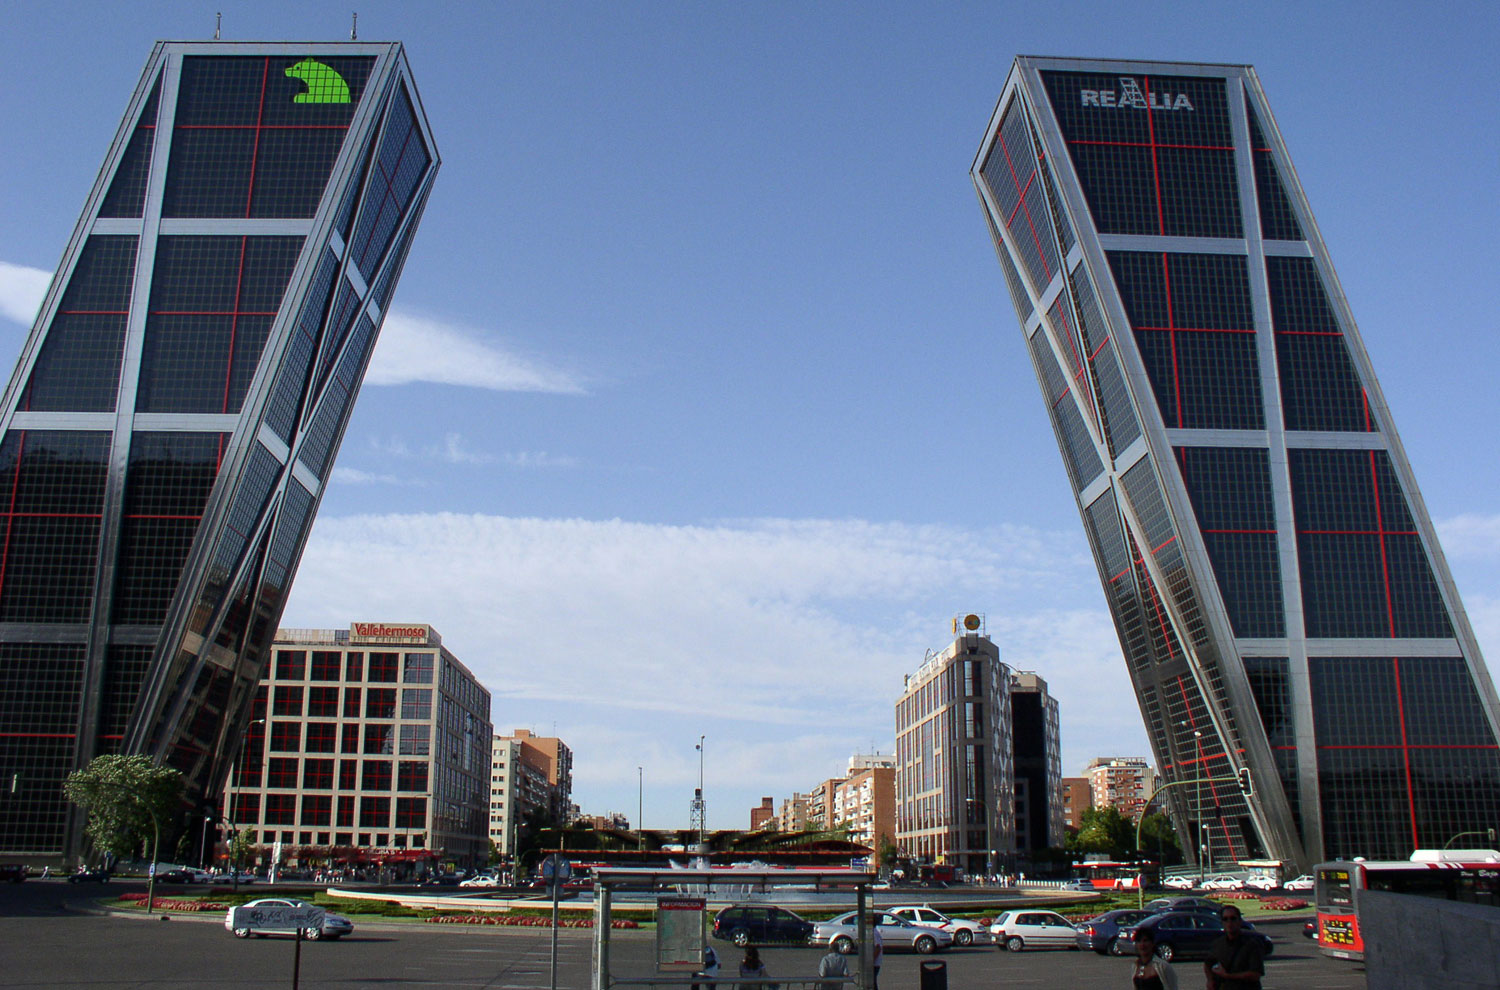 KIO Towers at Puerta Europa